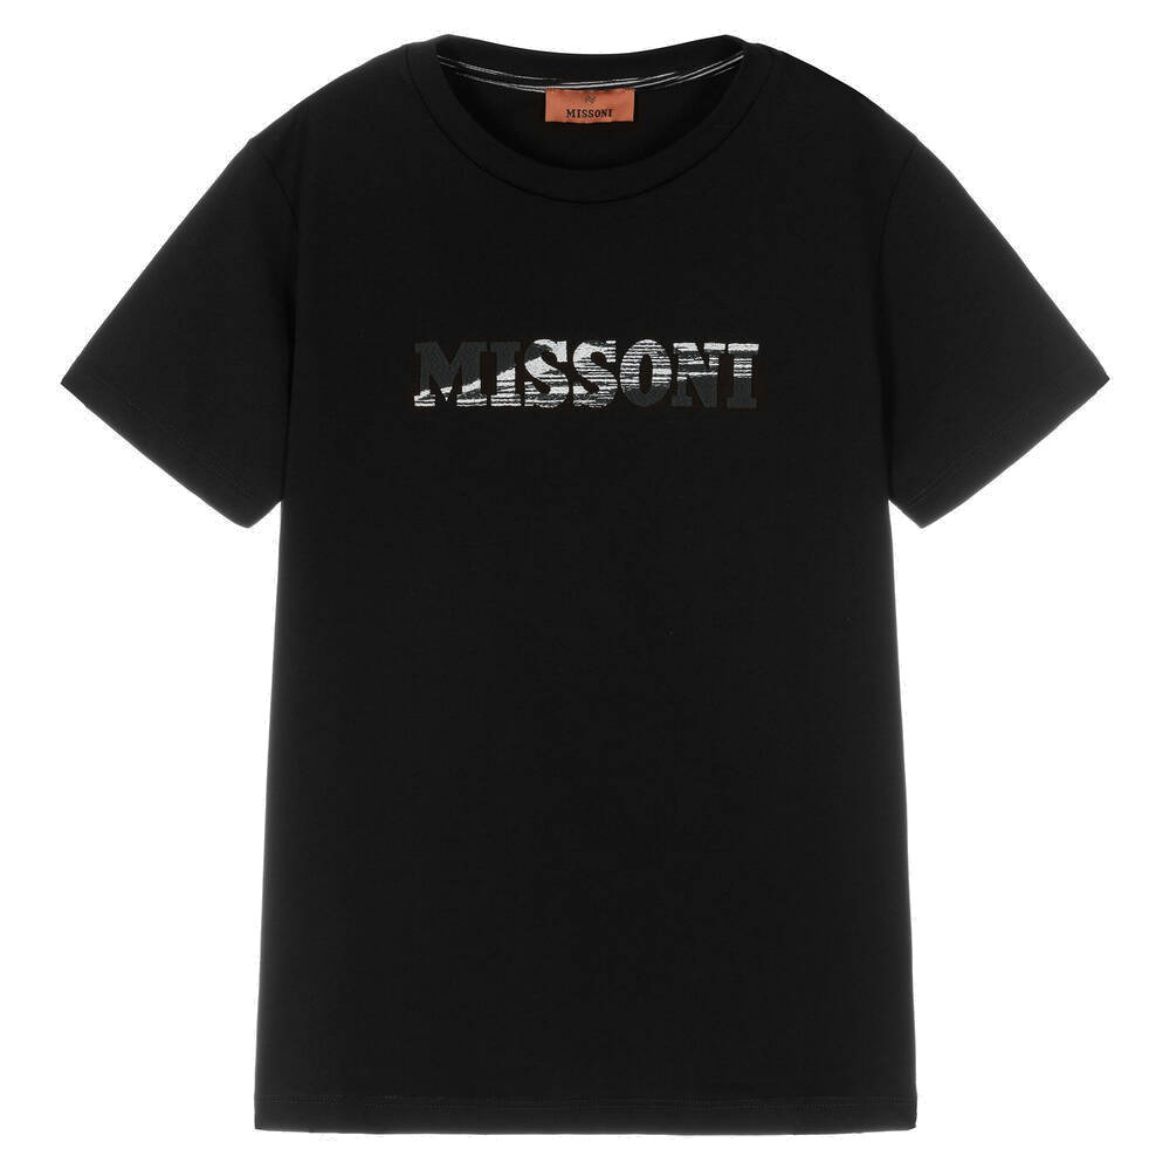 Picture of Missoni Boys Black Logo T-Shirt